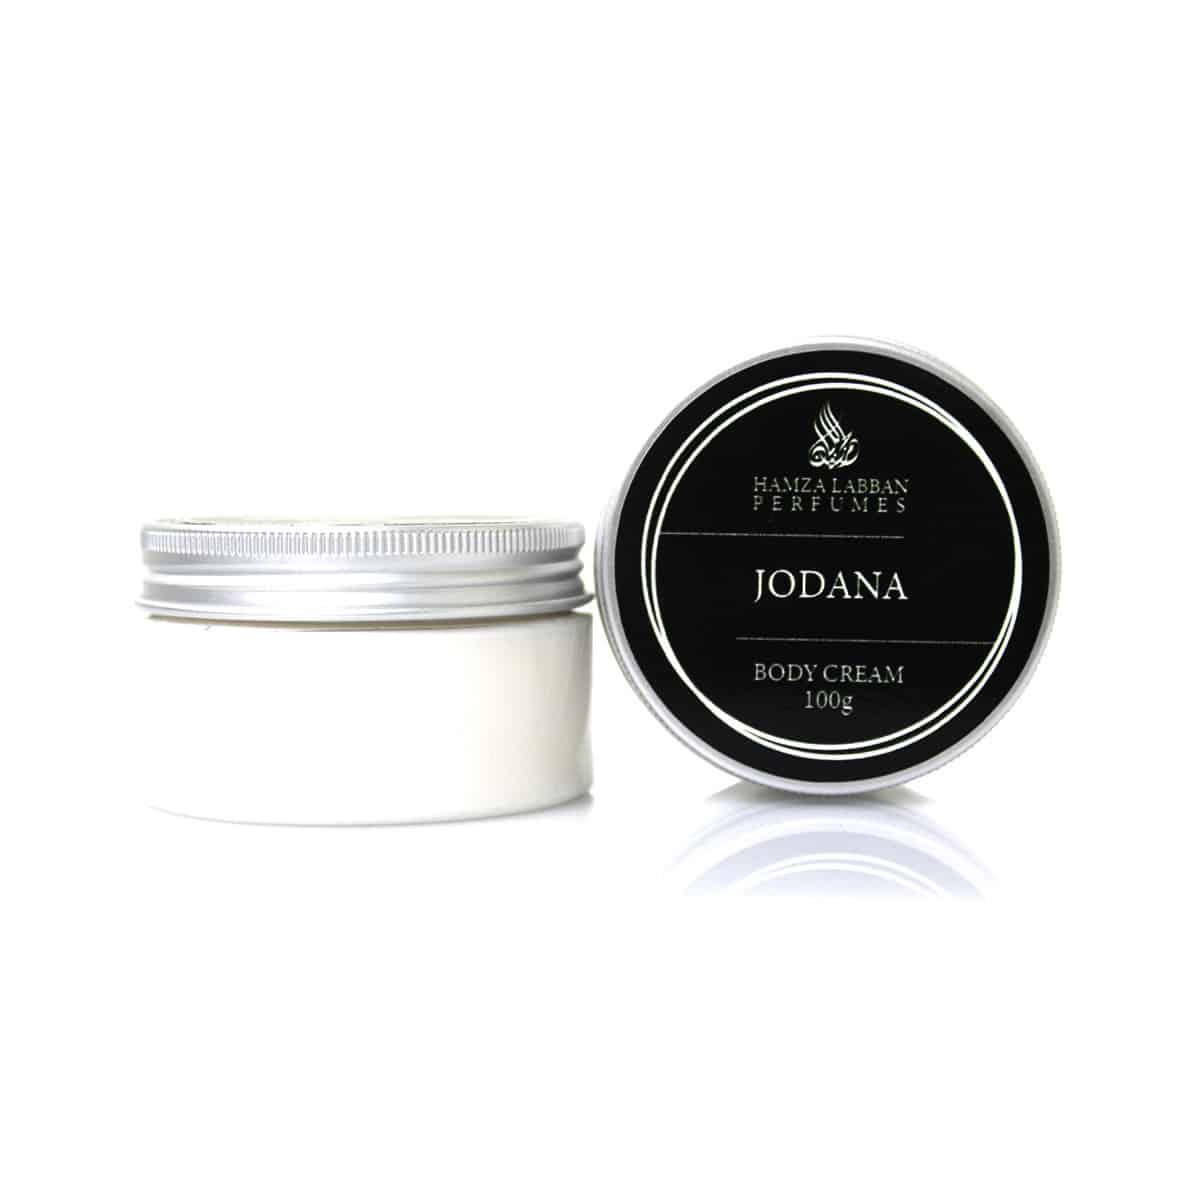 JODANA – Body Cream 100g.